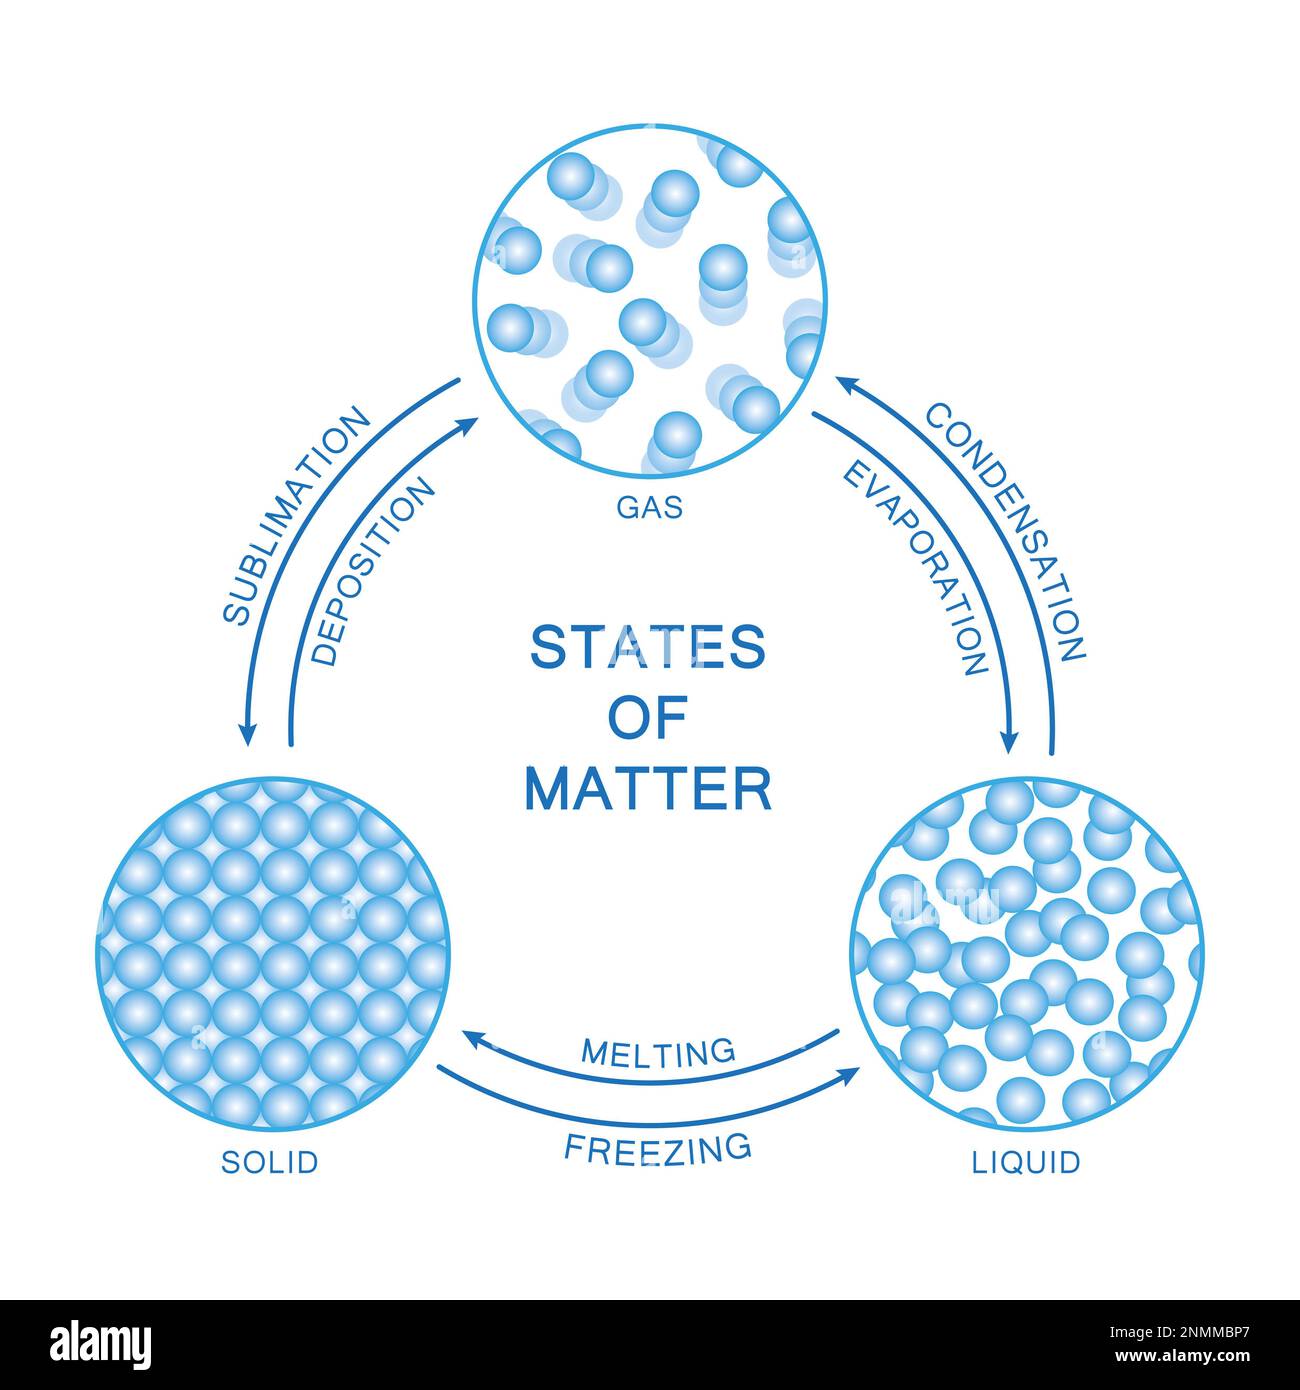 States of matter, illustration Stock Photo